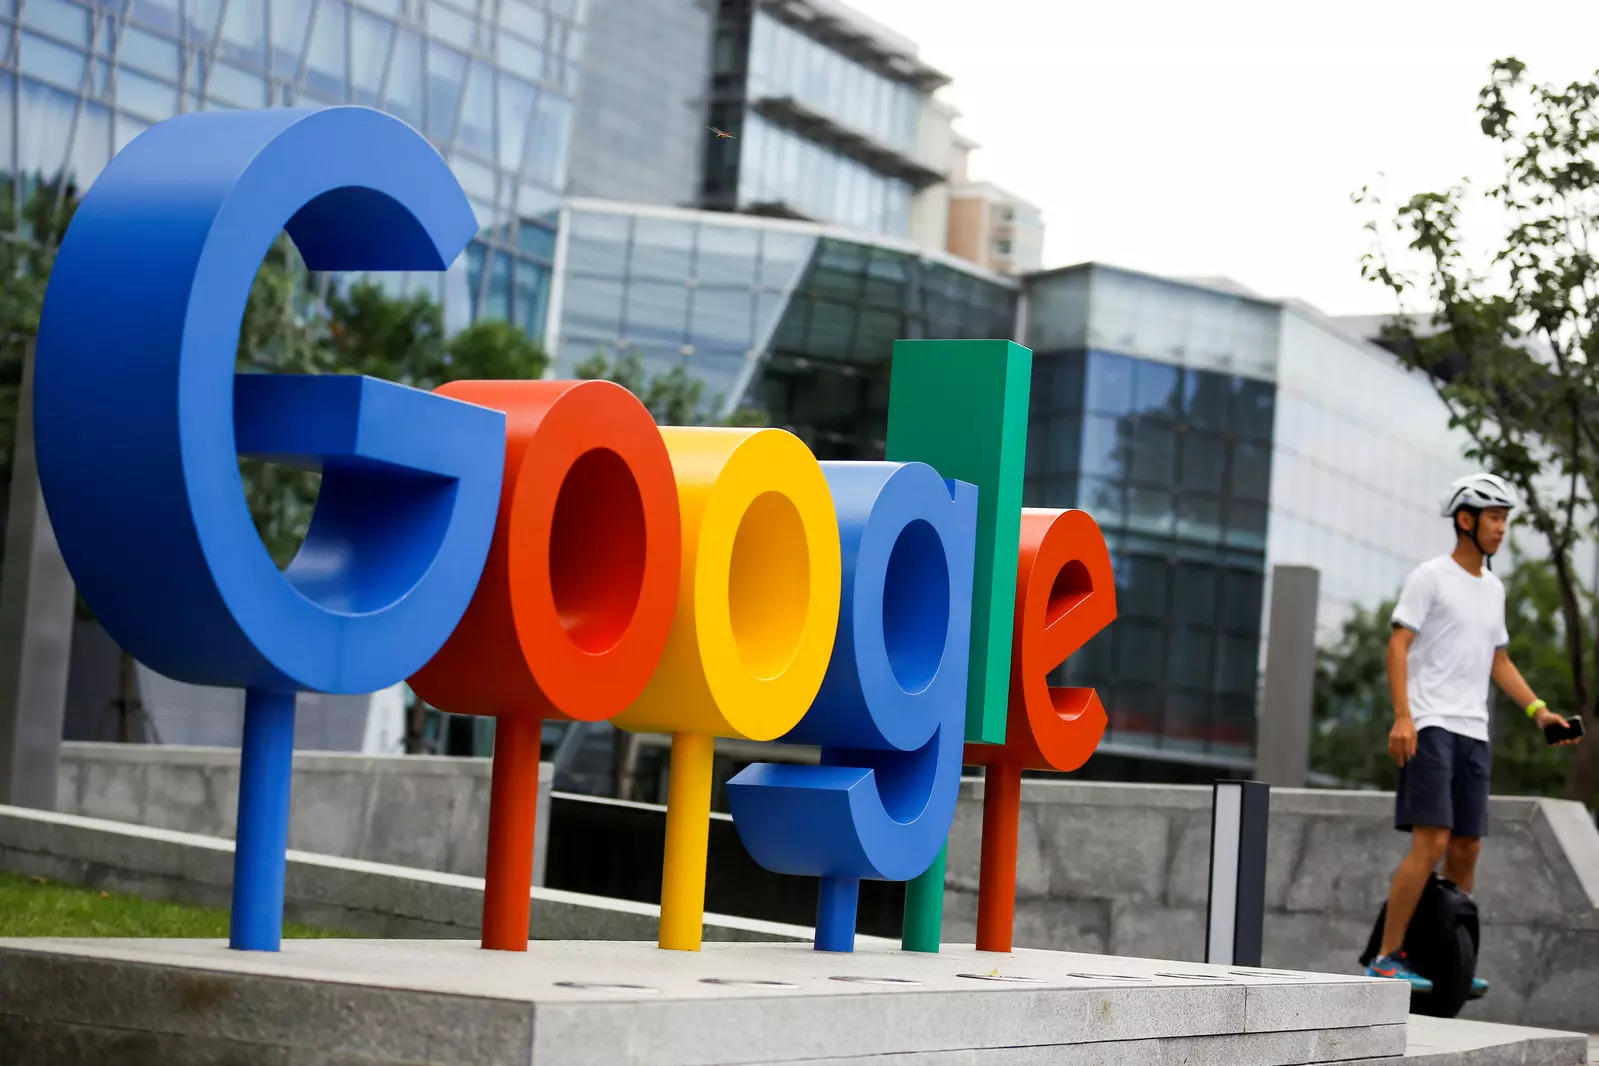 Google's privacy push draws U.S. antitrust scrutiny: sources